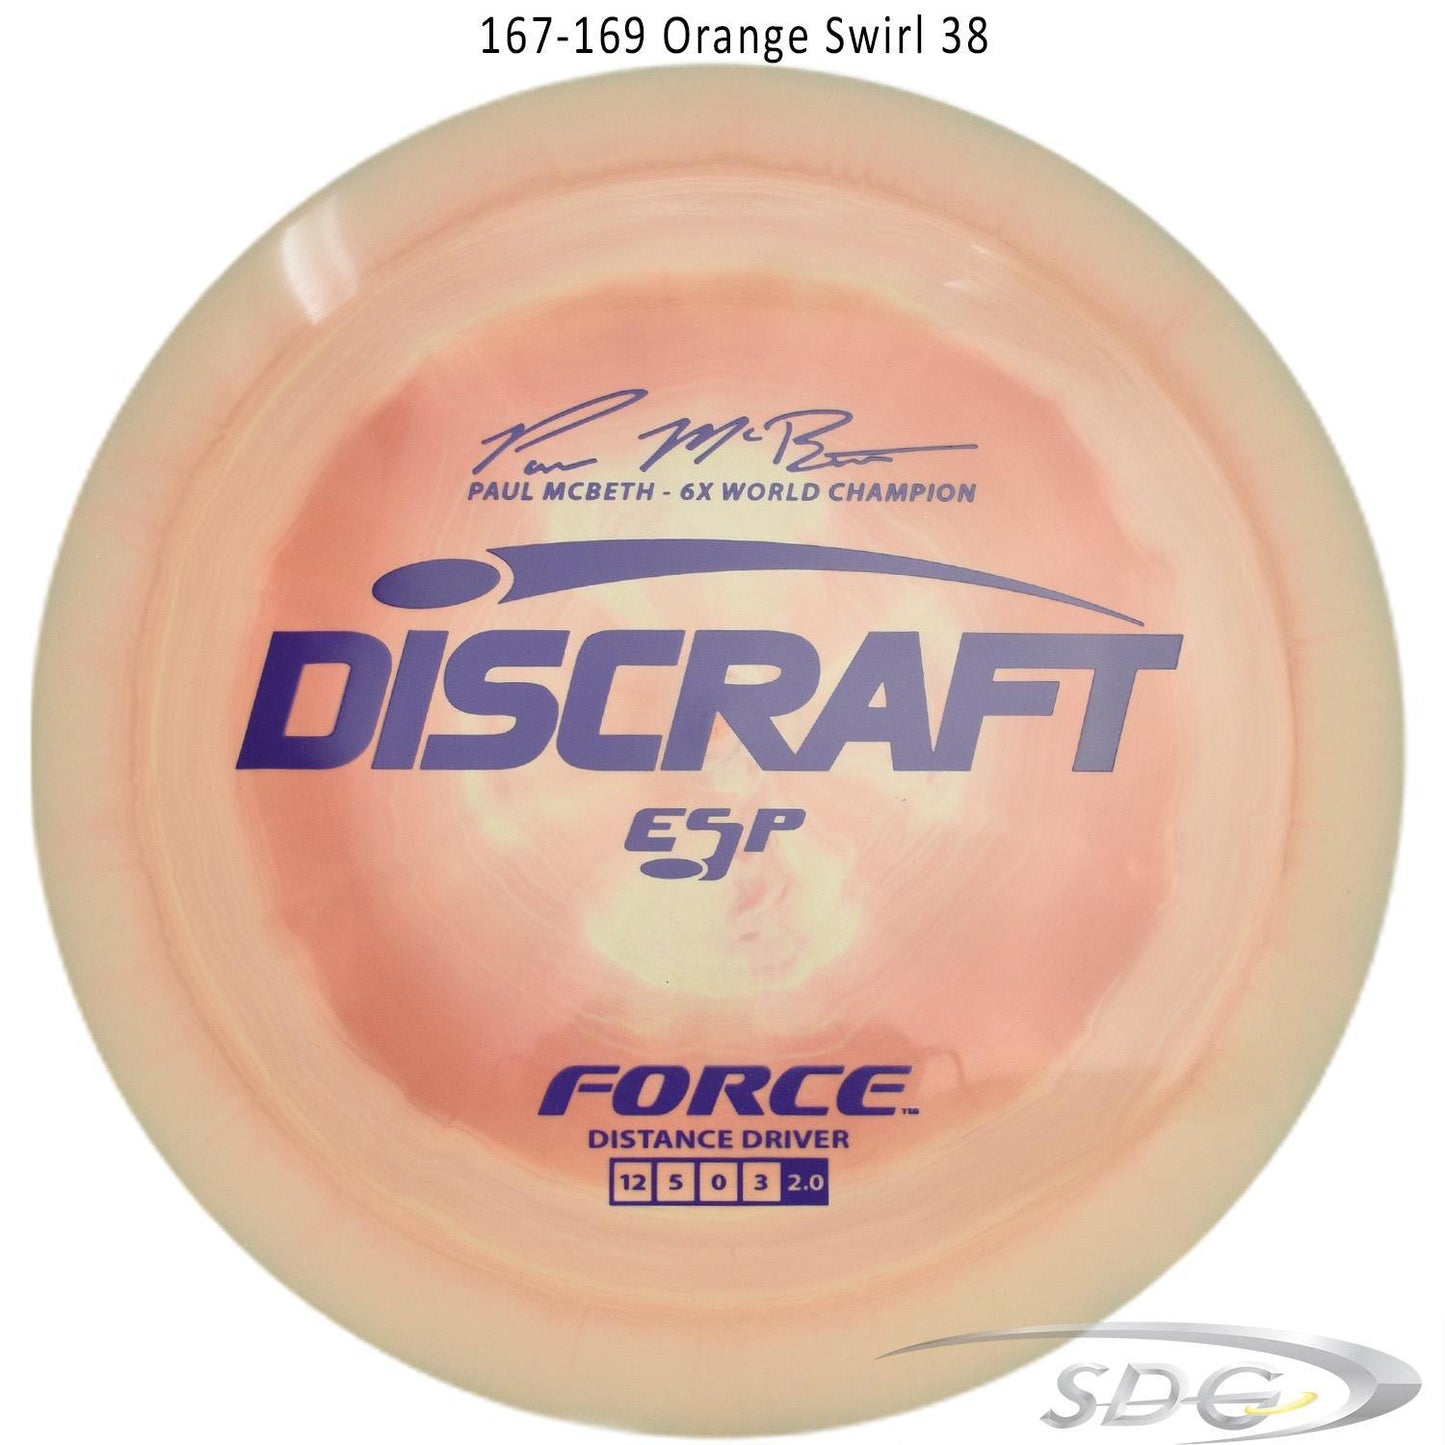 discraft-esp-force-6x-paul-mcbeth-signature-disc-golf-distance-driver-169-160-weights 167-169 Orange Swirl 38 